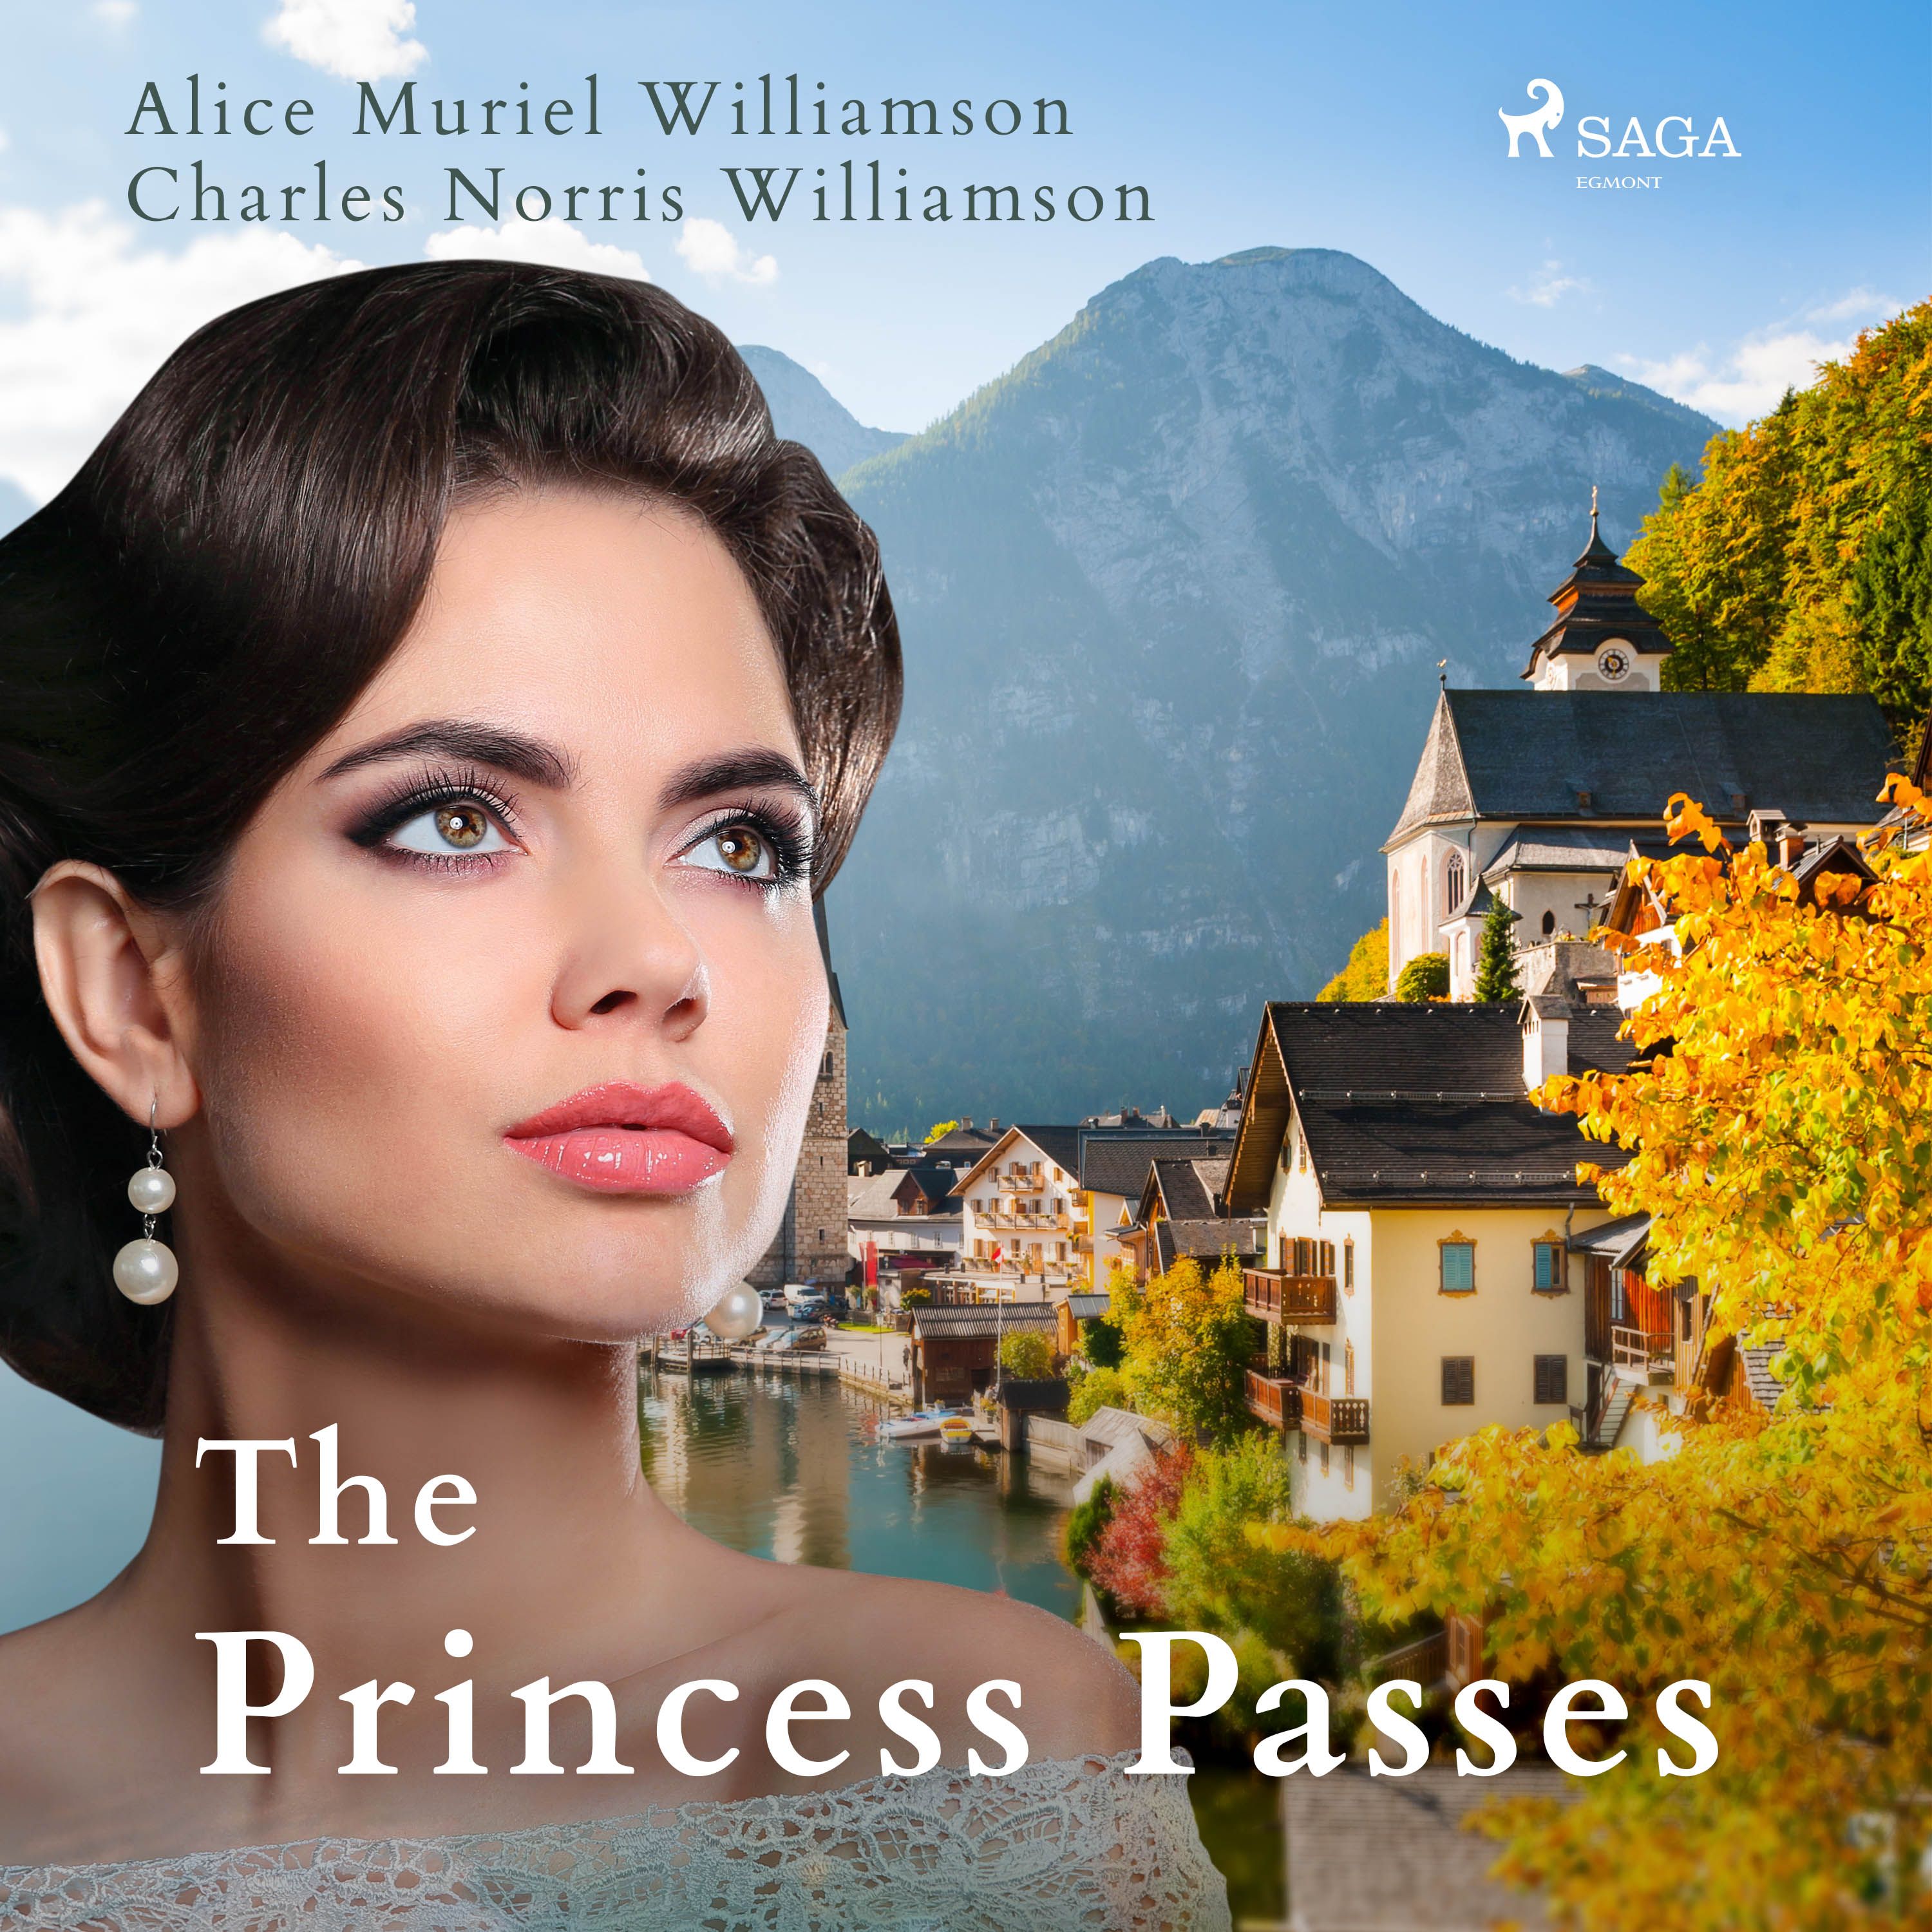 The Princess Passes, lydbog af Alice Muriel Williamson, Charles Norris Williamson